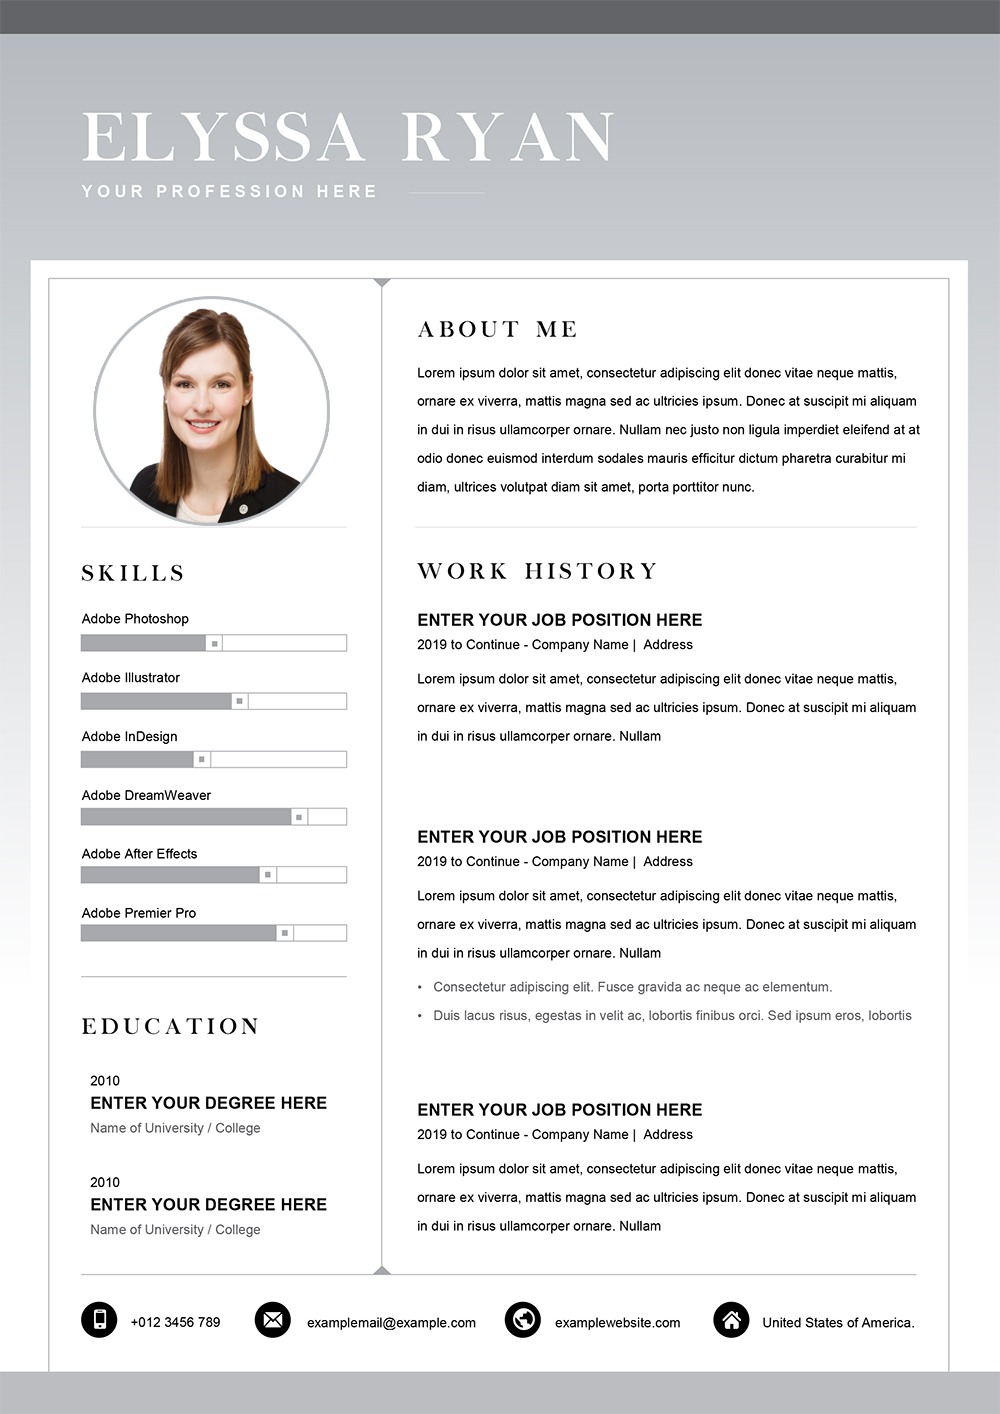 template-of-resume-for-job-application-job-resume-format-job-resume